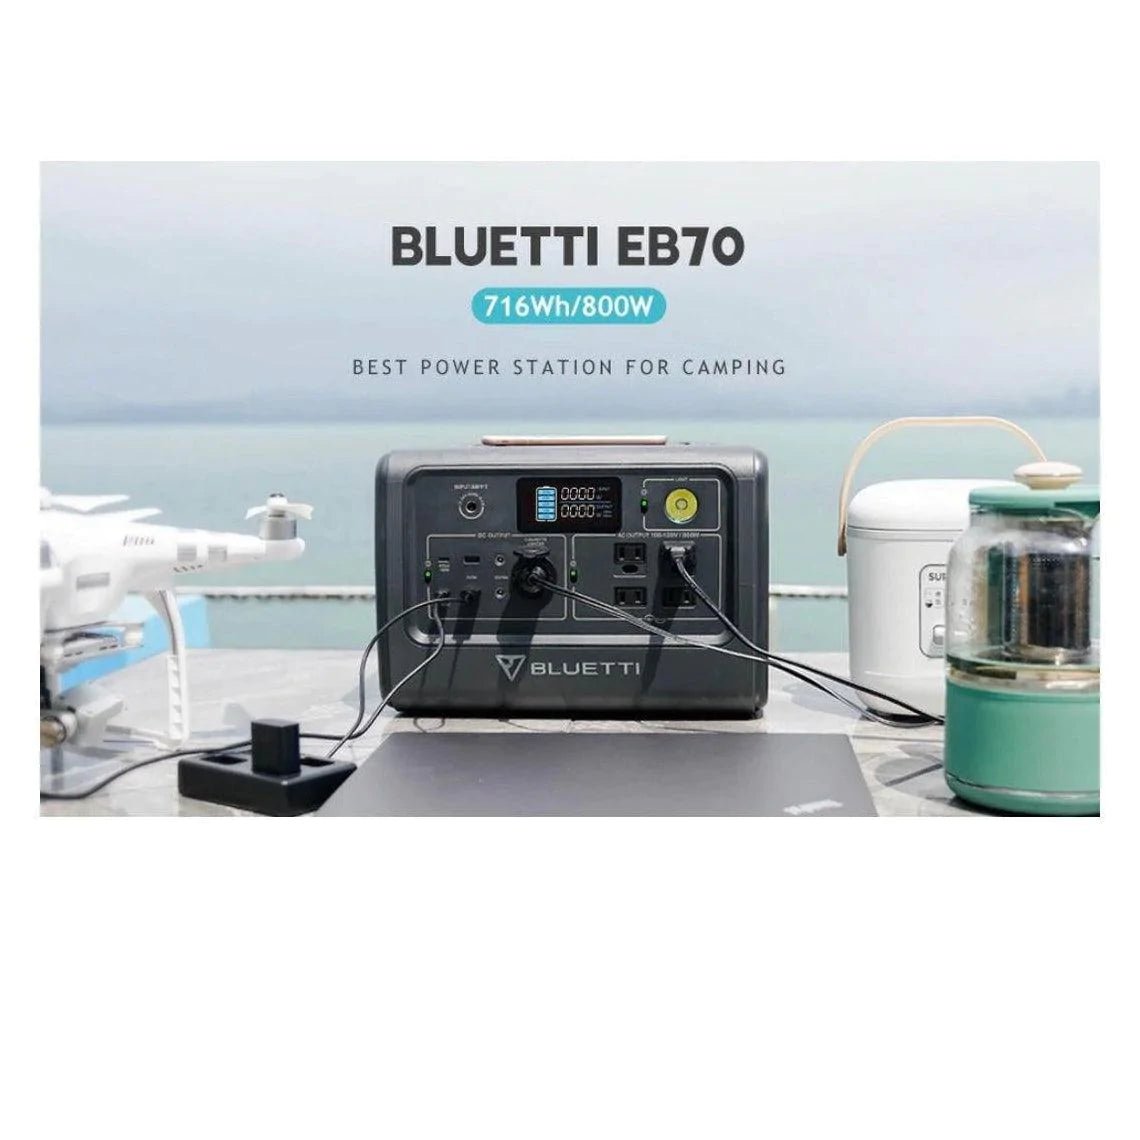 BLUETTI EB70| 700W 716Wh USP Mode Portable Power Station